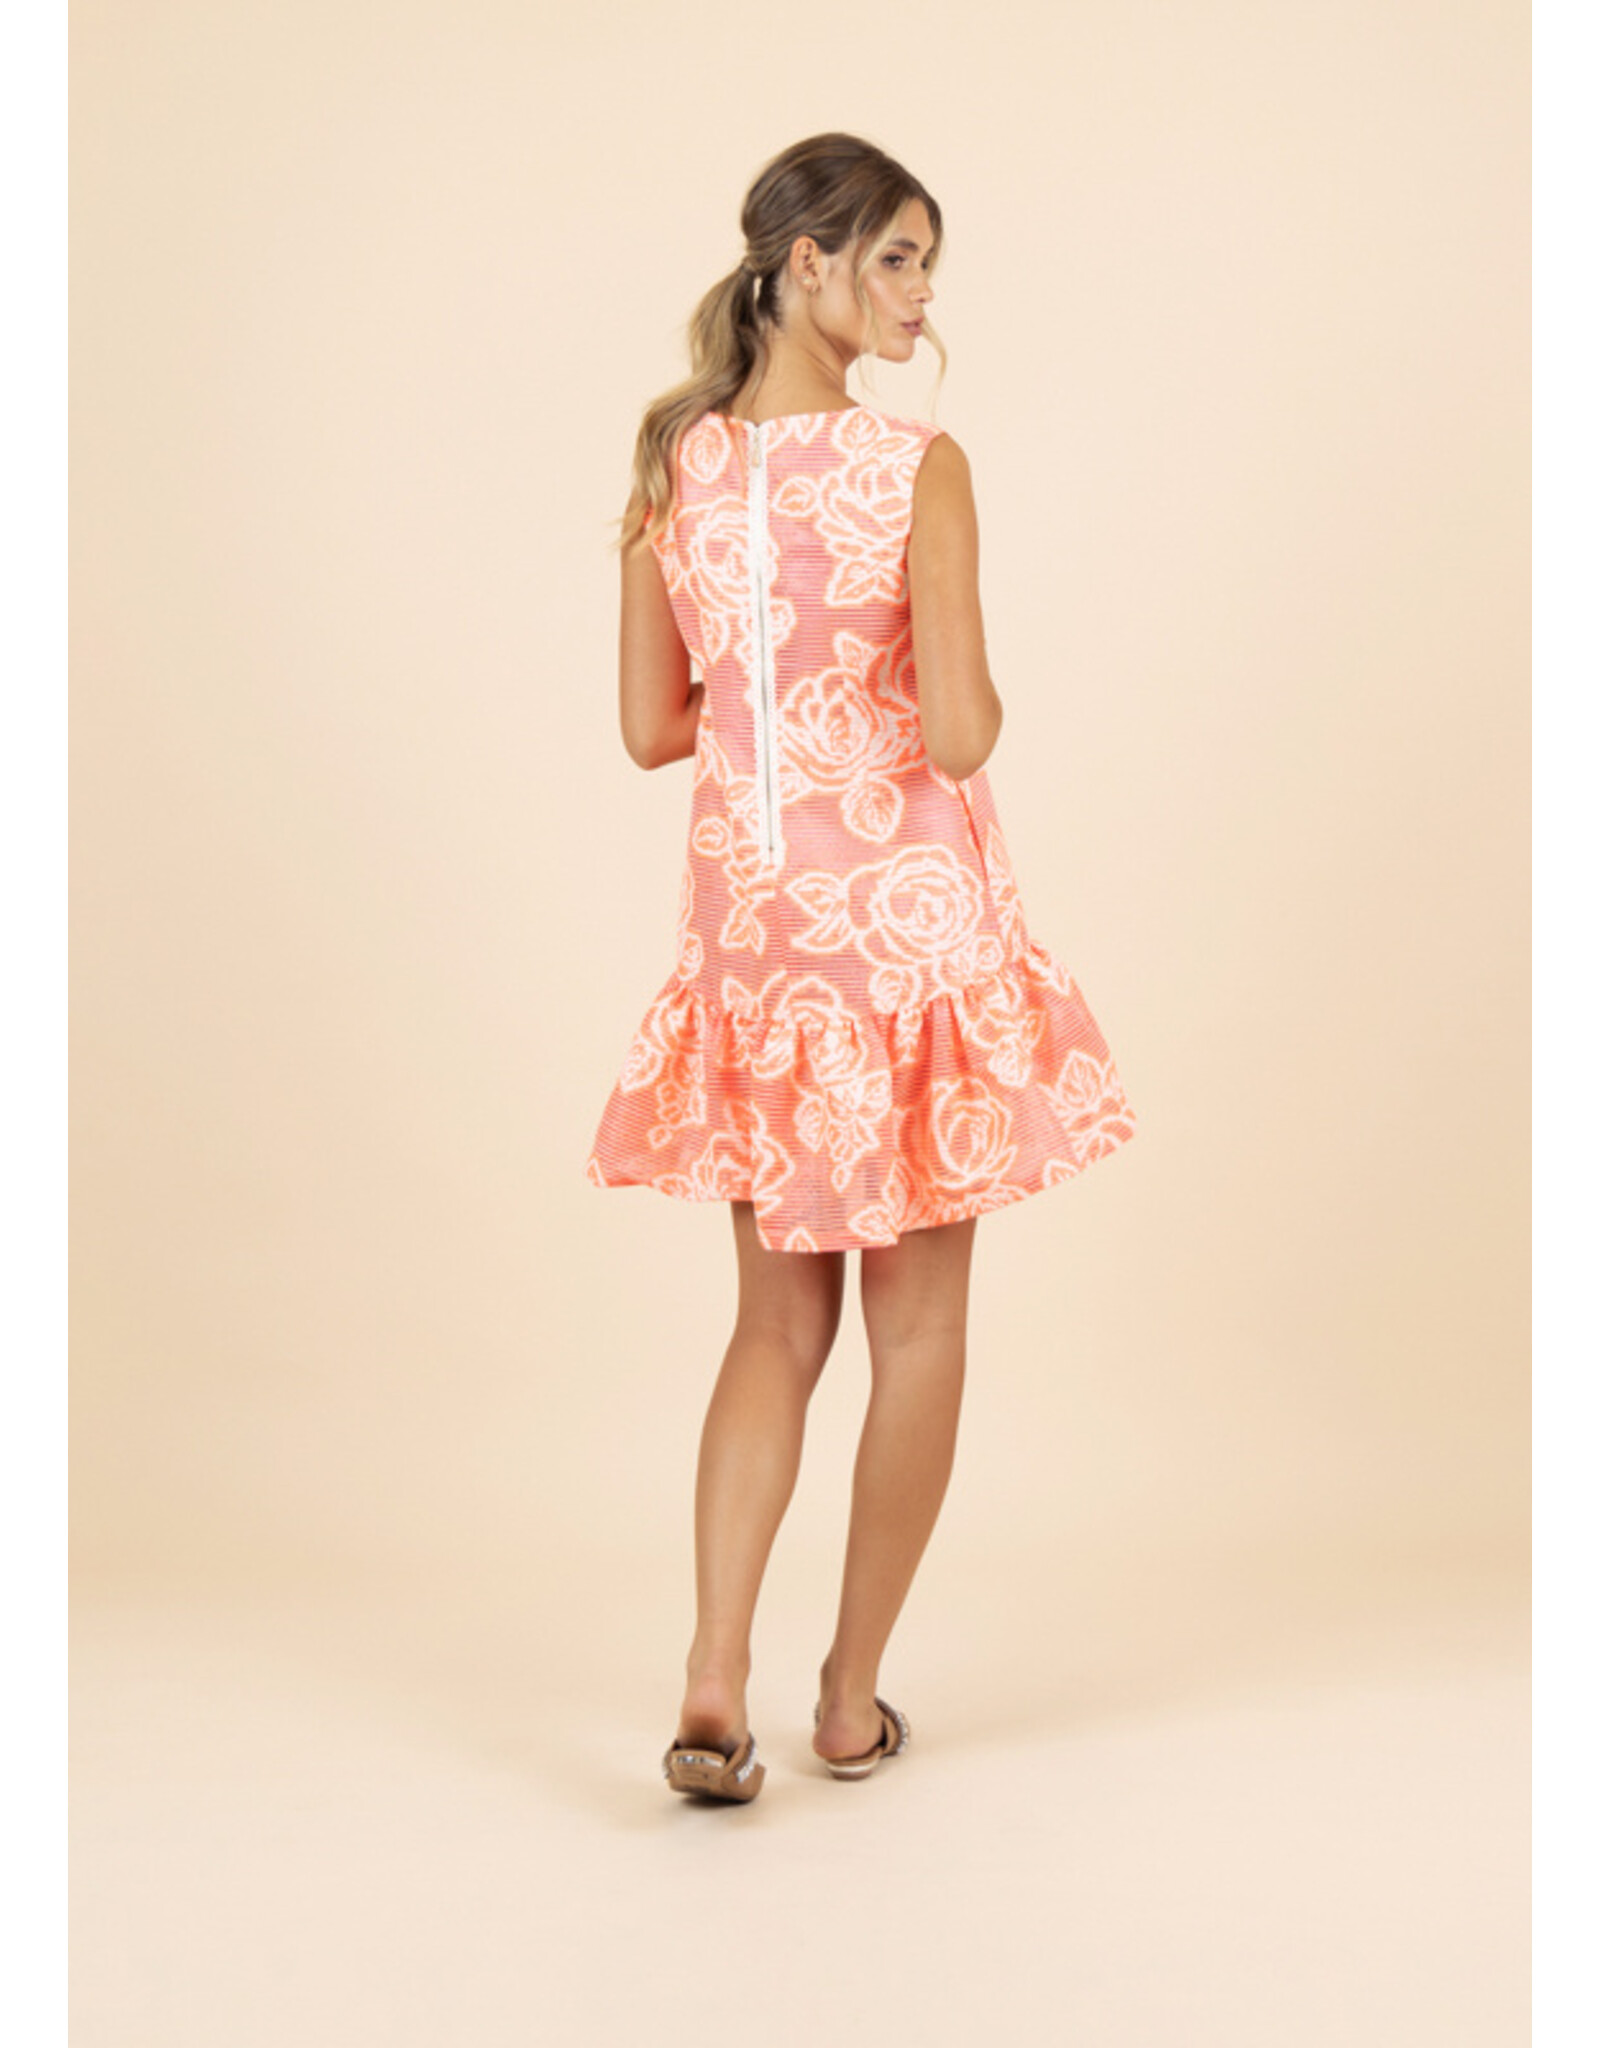 Fee G Fee G - 7468140 - Madison - Cute Sleeveless Dress